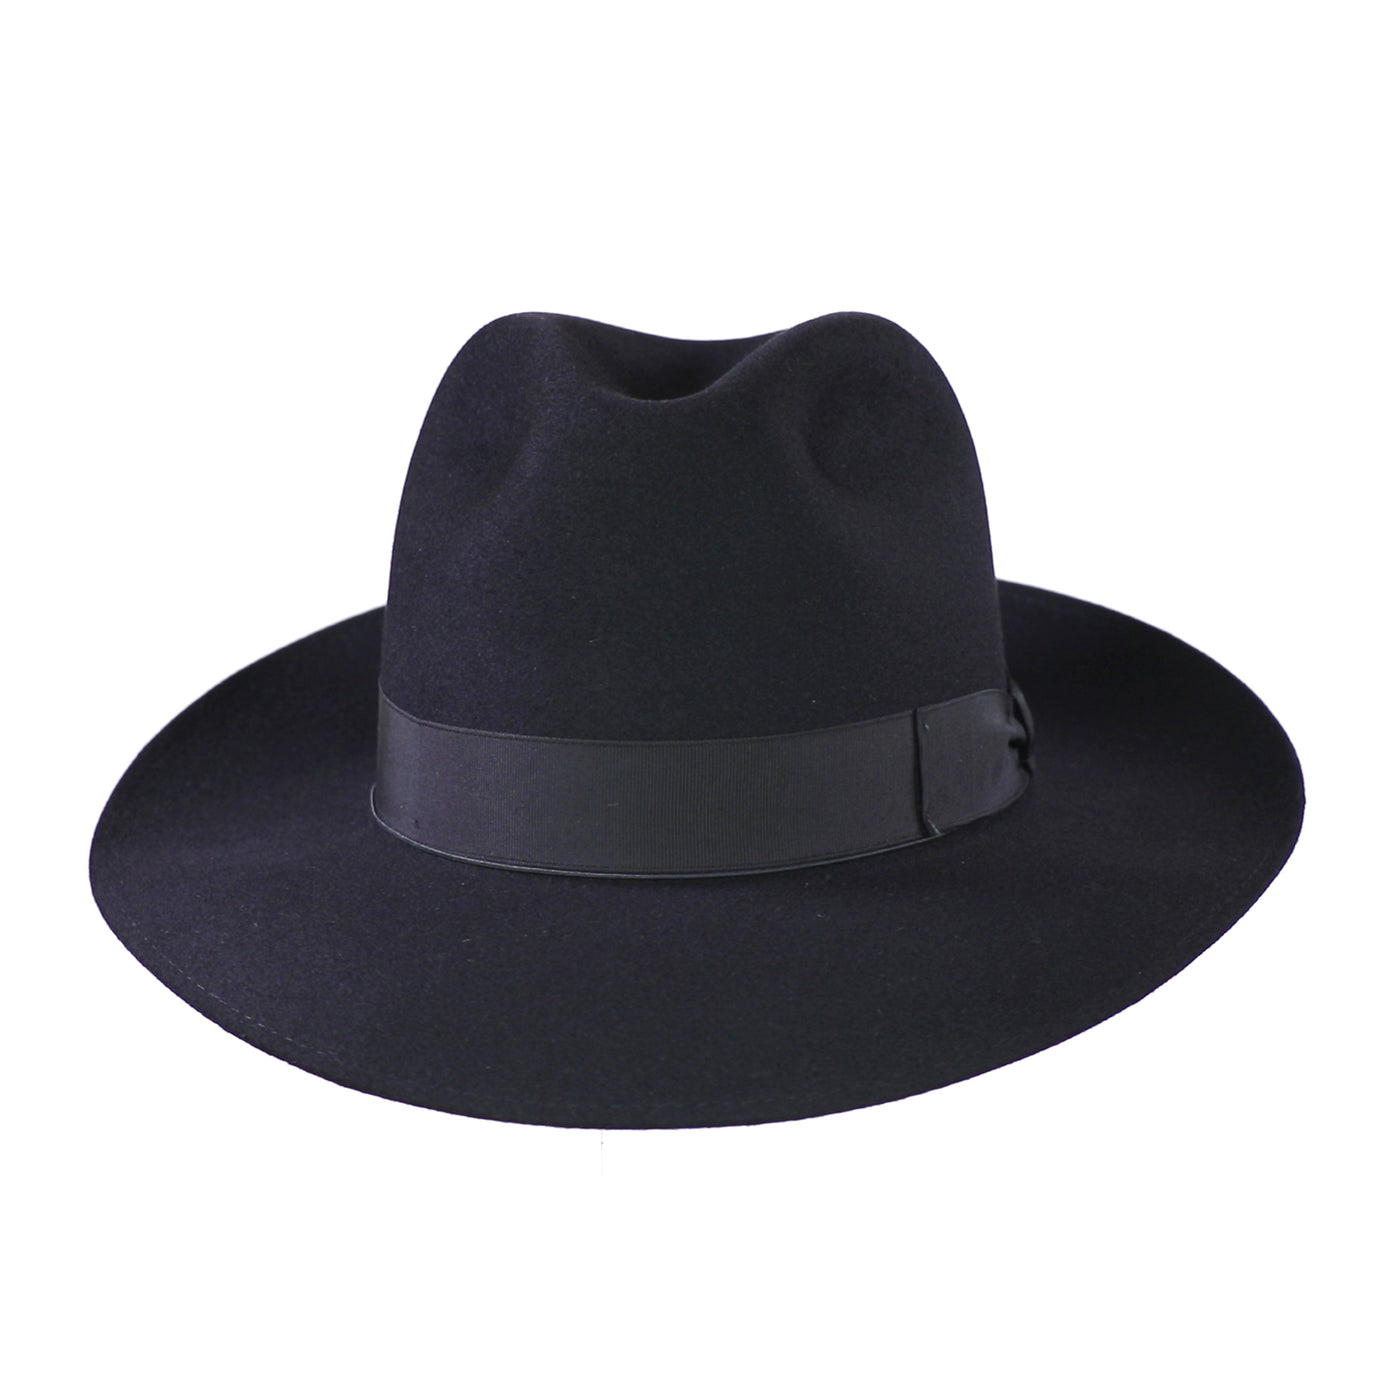 Vicenza 300, product_type] - Borsalino for Atica fedora hat